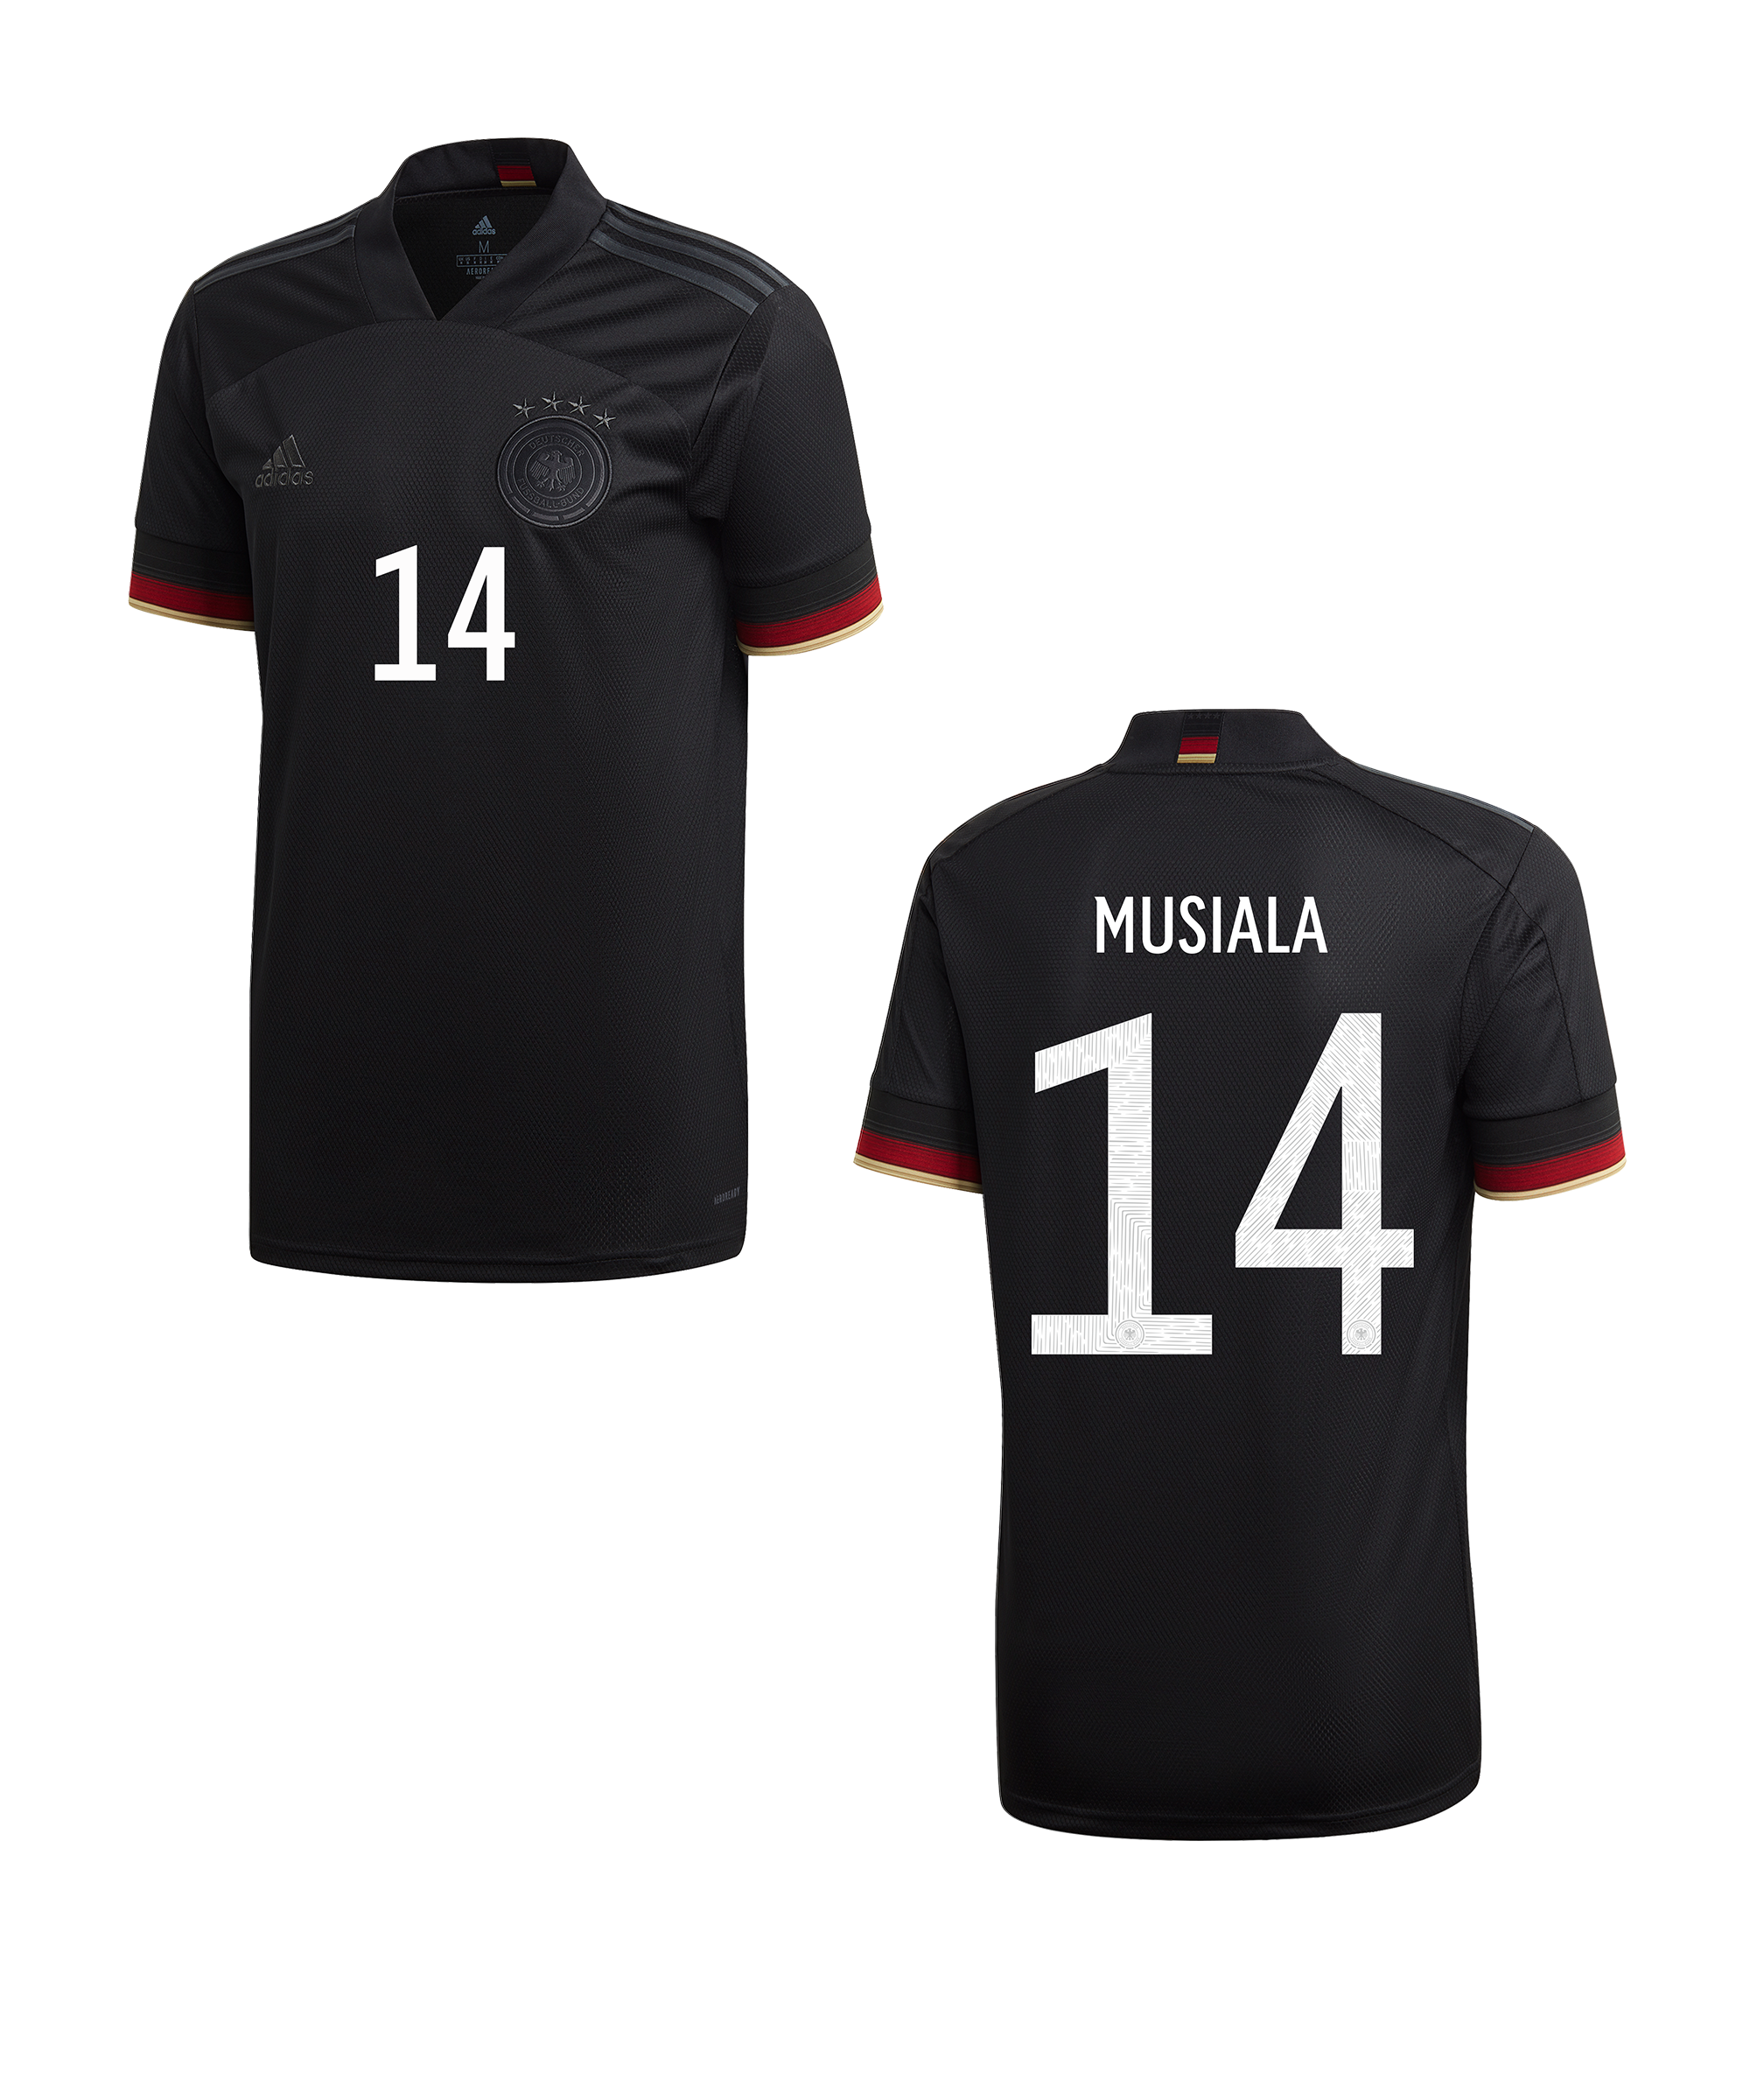 Maglia adidas DFB Deutschland t Away EM2020 Musiala